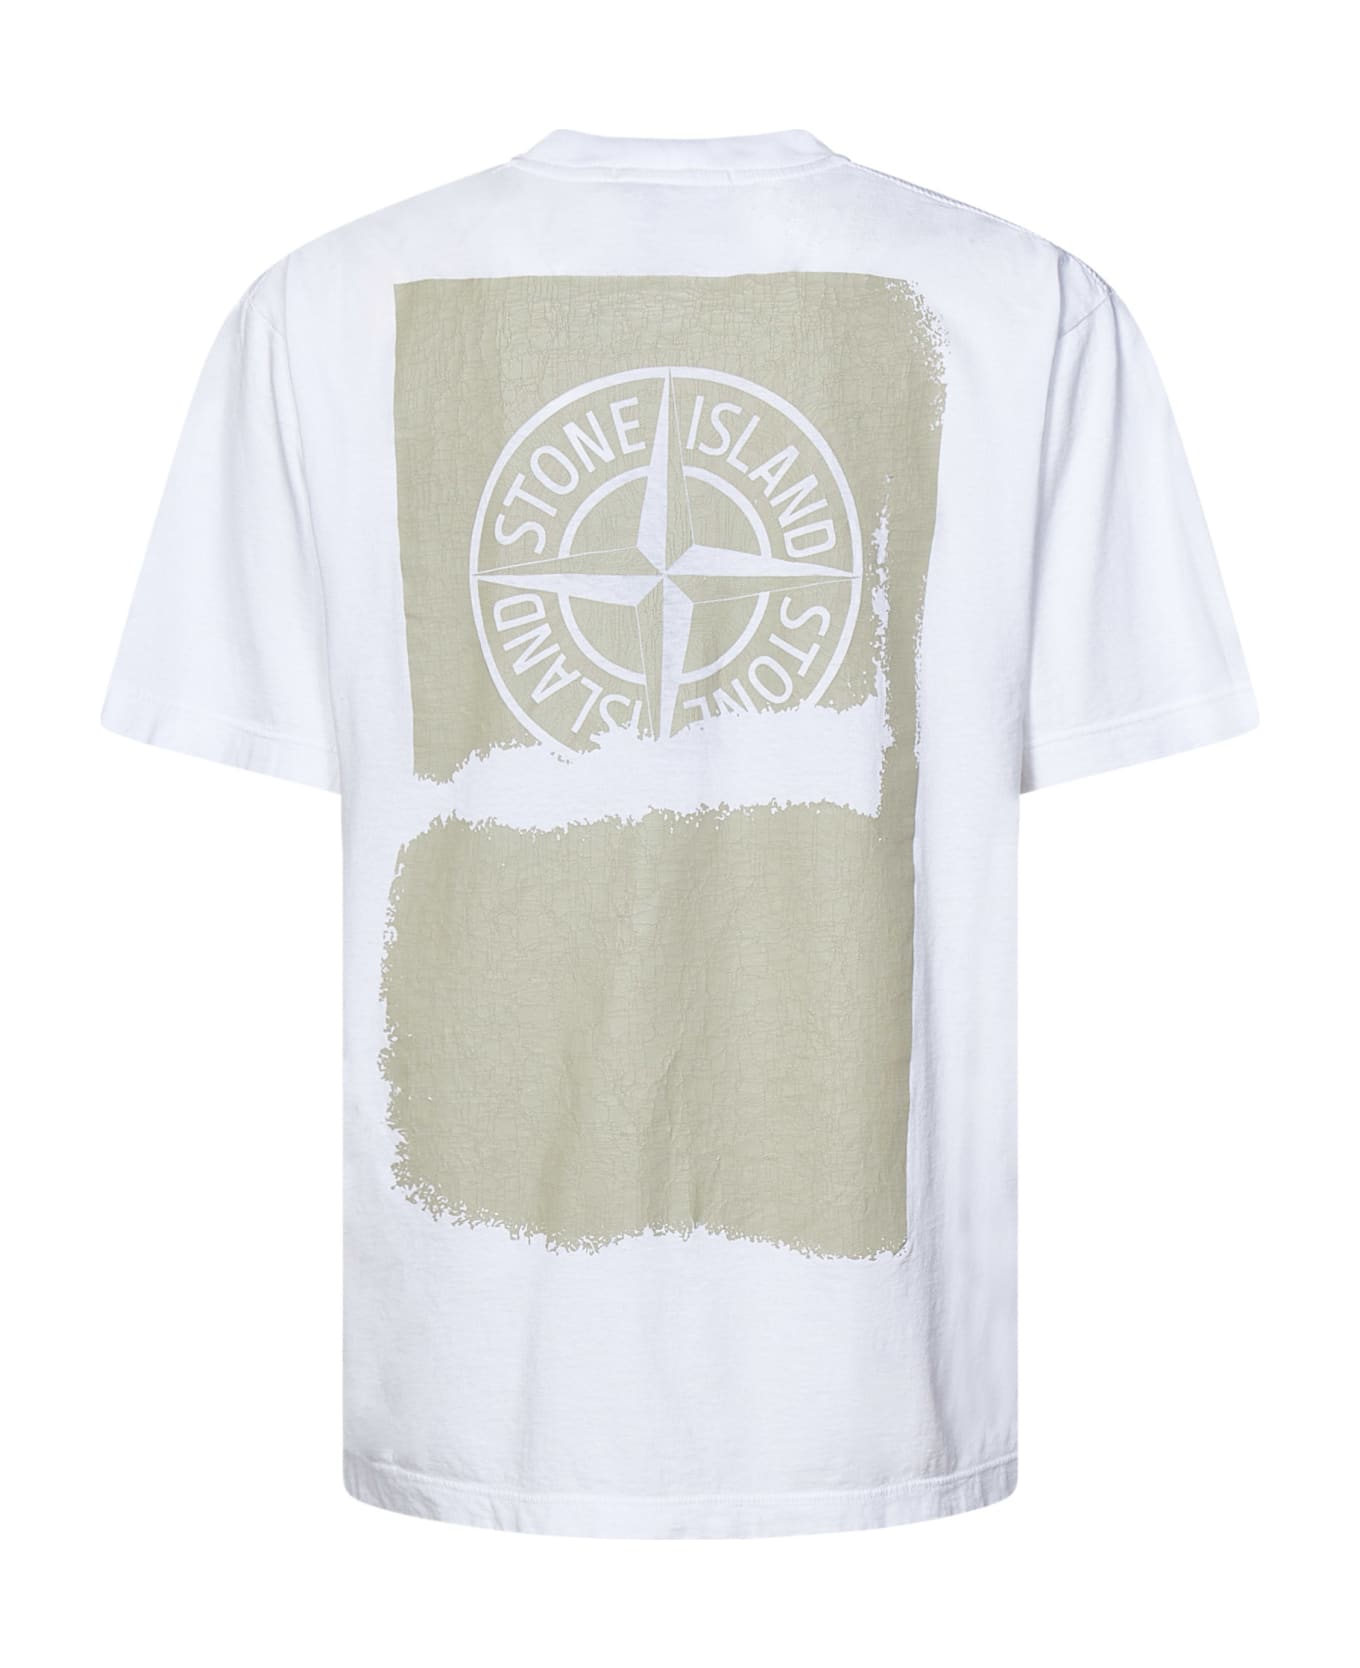 Stone Island T-shirt - White